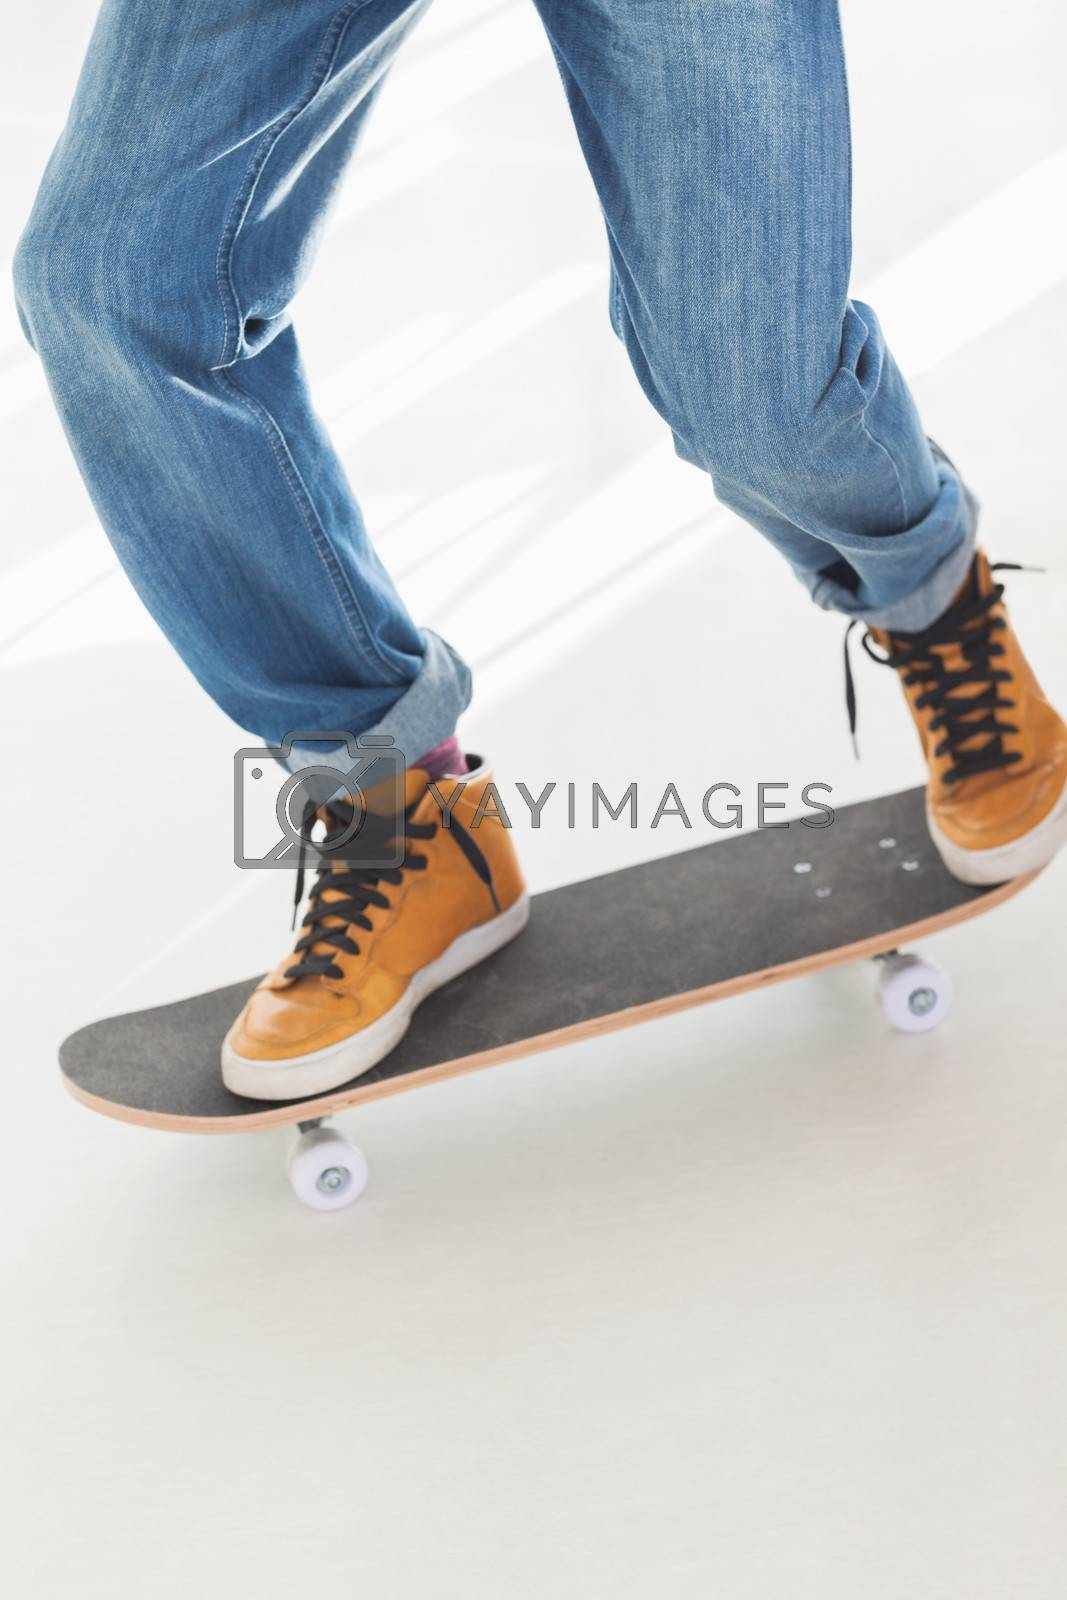 Royalty free image of Man on a skateboard by Wavebreakmedia